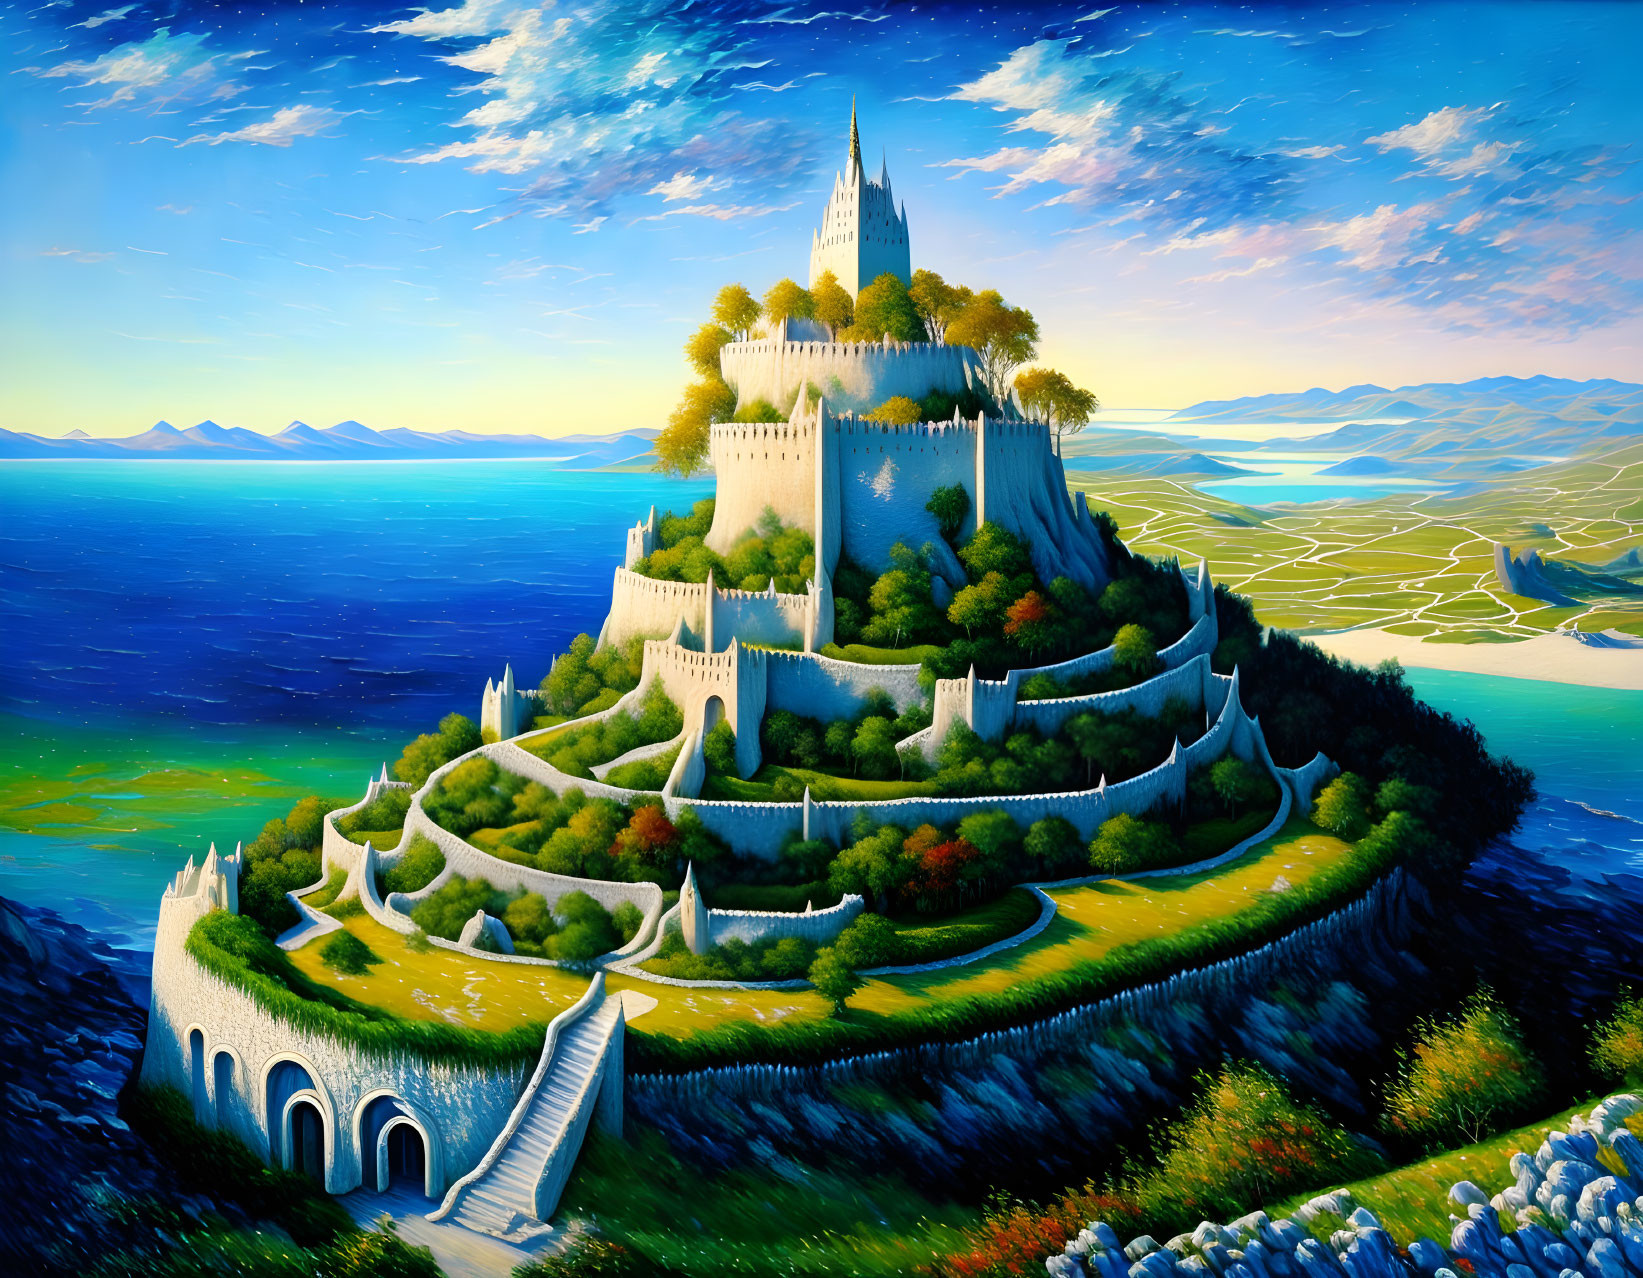 Fantastical castle painting overlooking serene coast